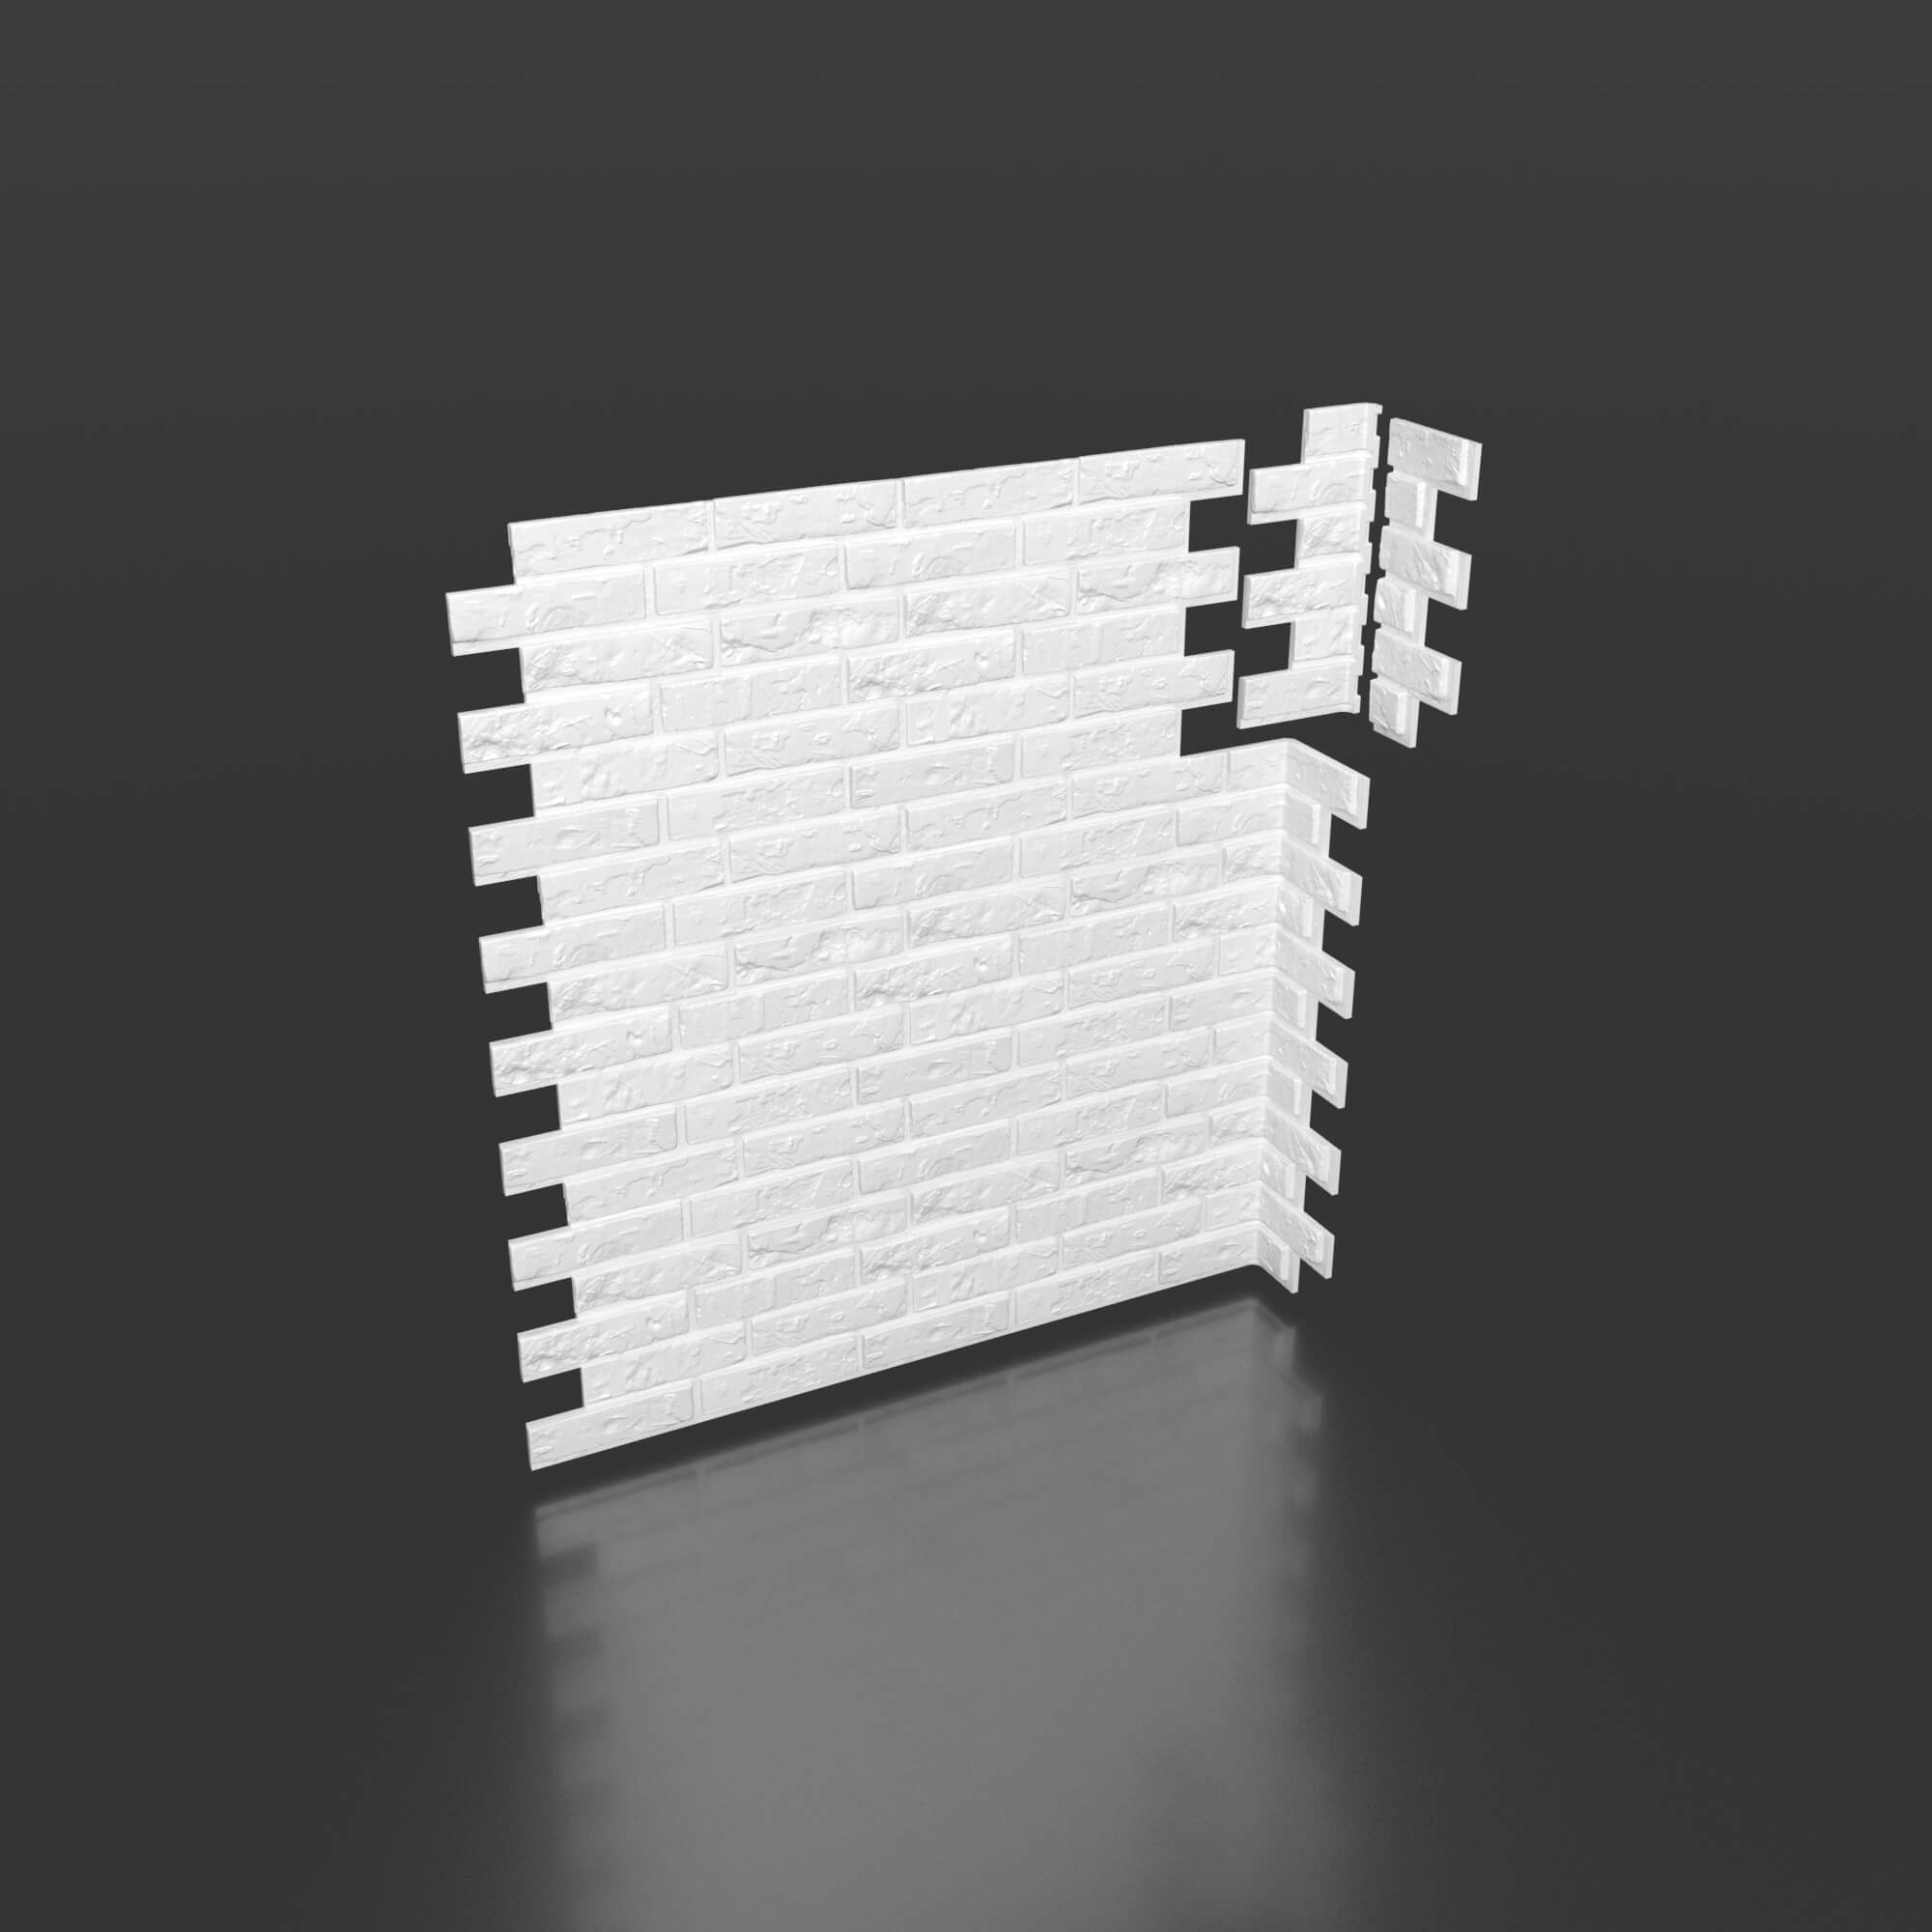 OLD BRICK 3D Wall Panel EPS - 3D Polystyrene Wall Panels | DecorMania